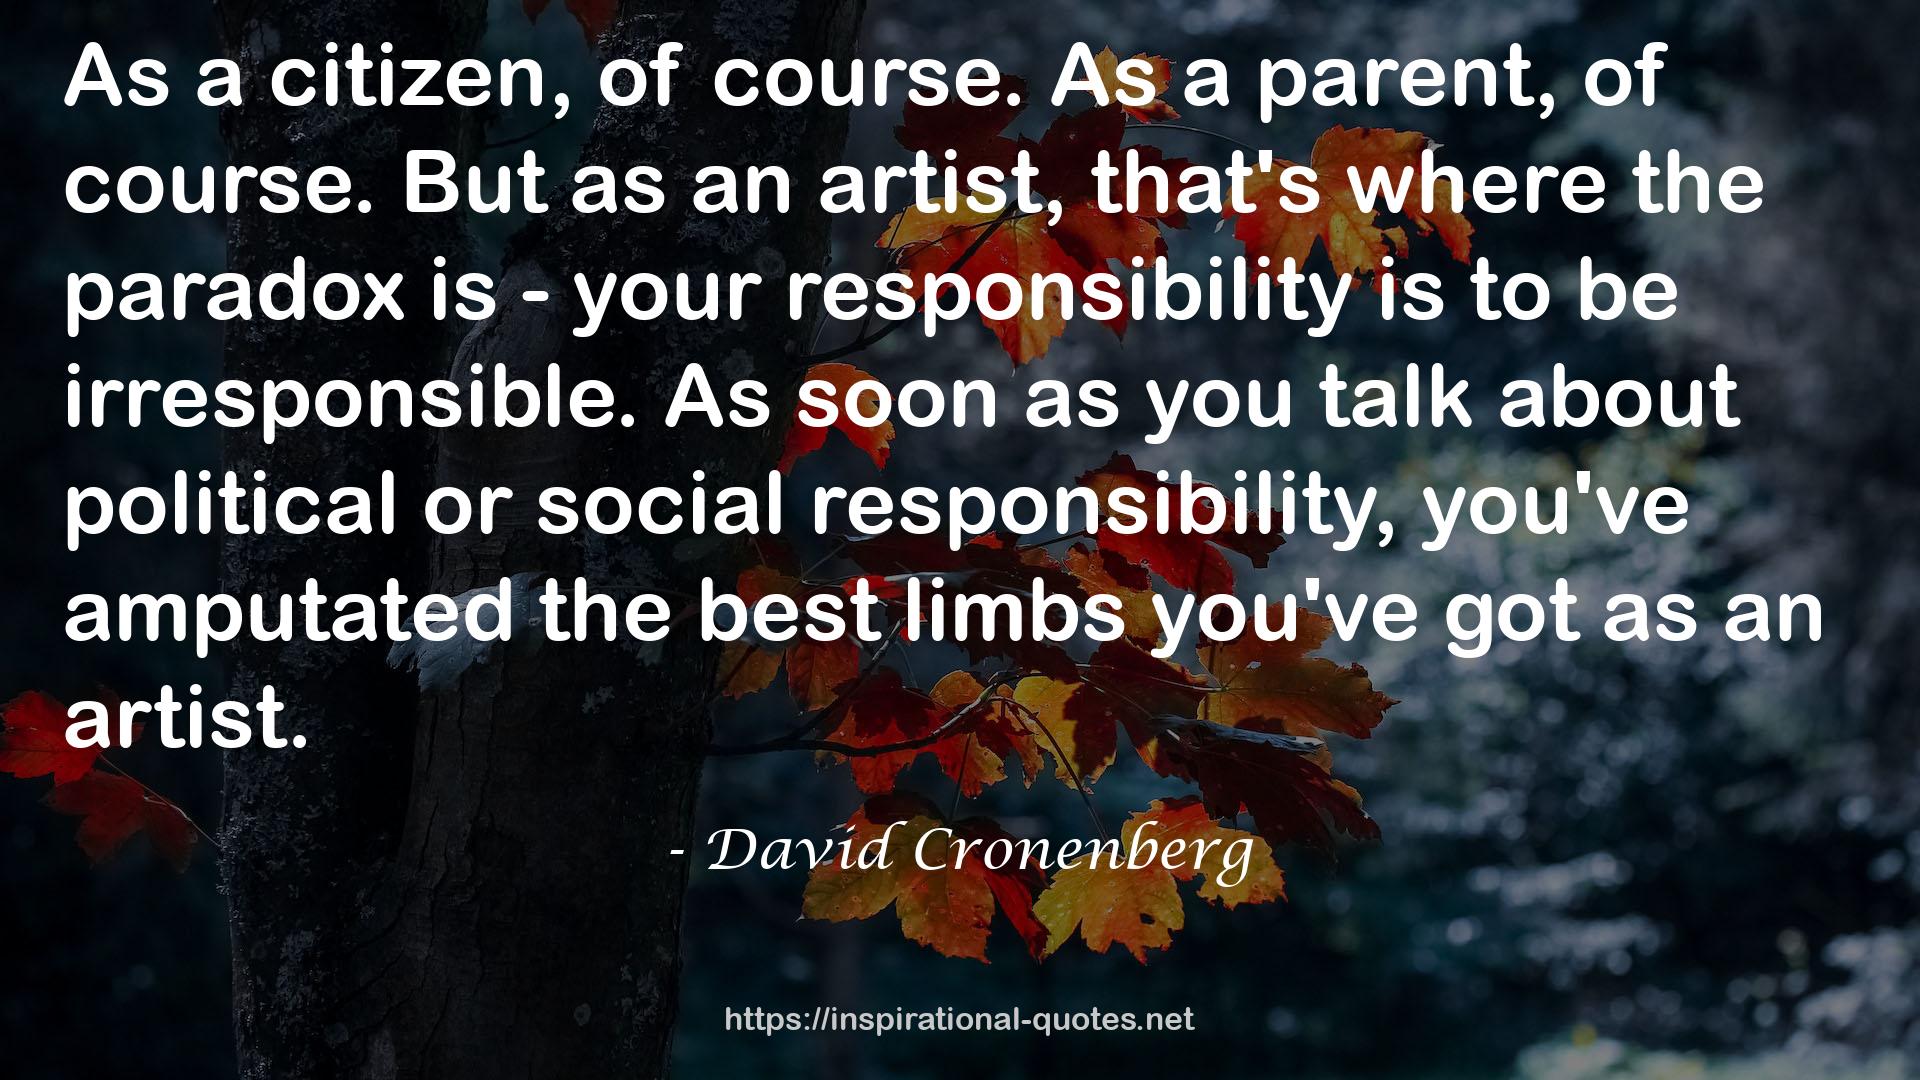 David Cronenberg QUOTES